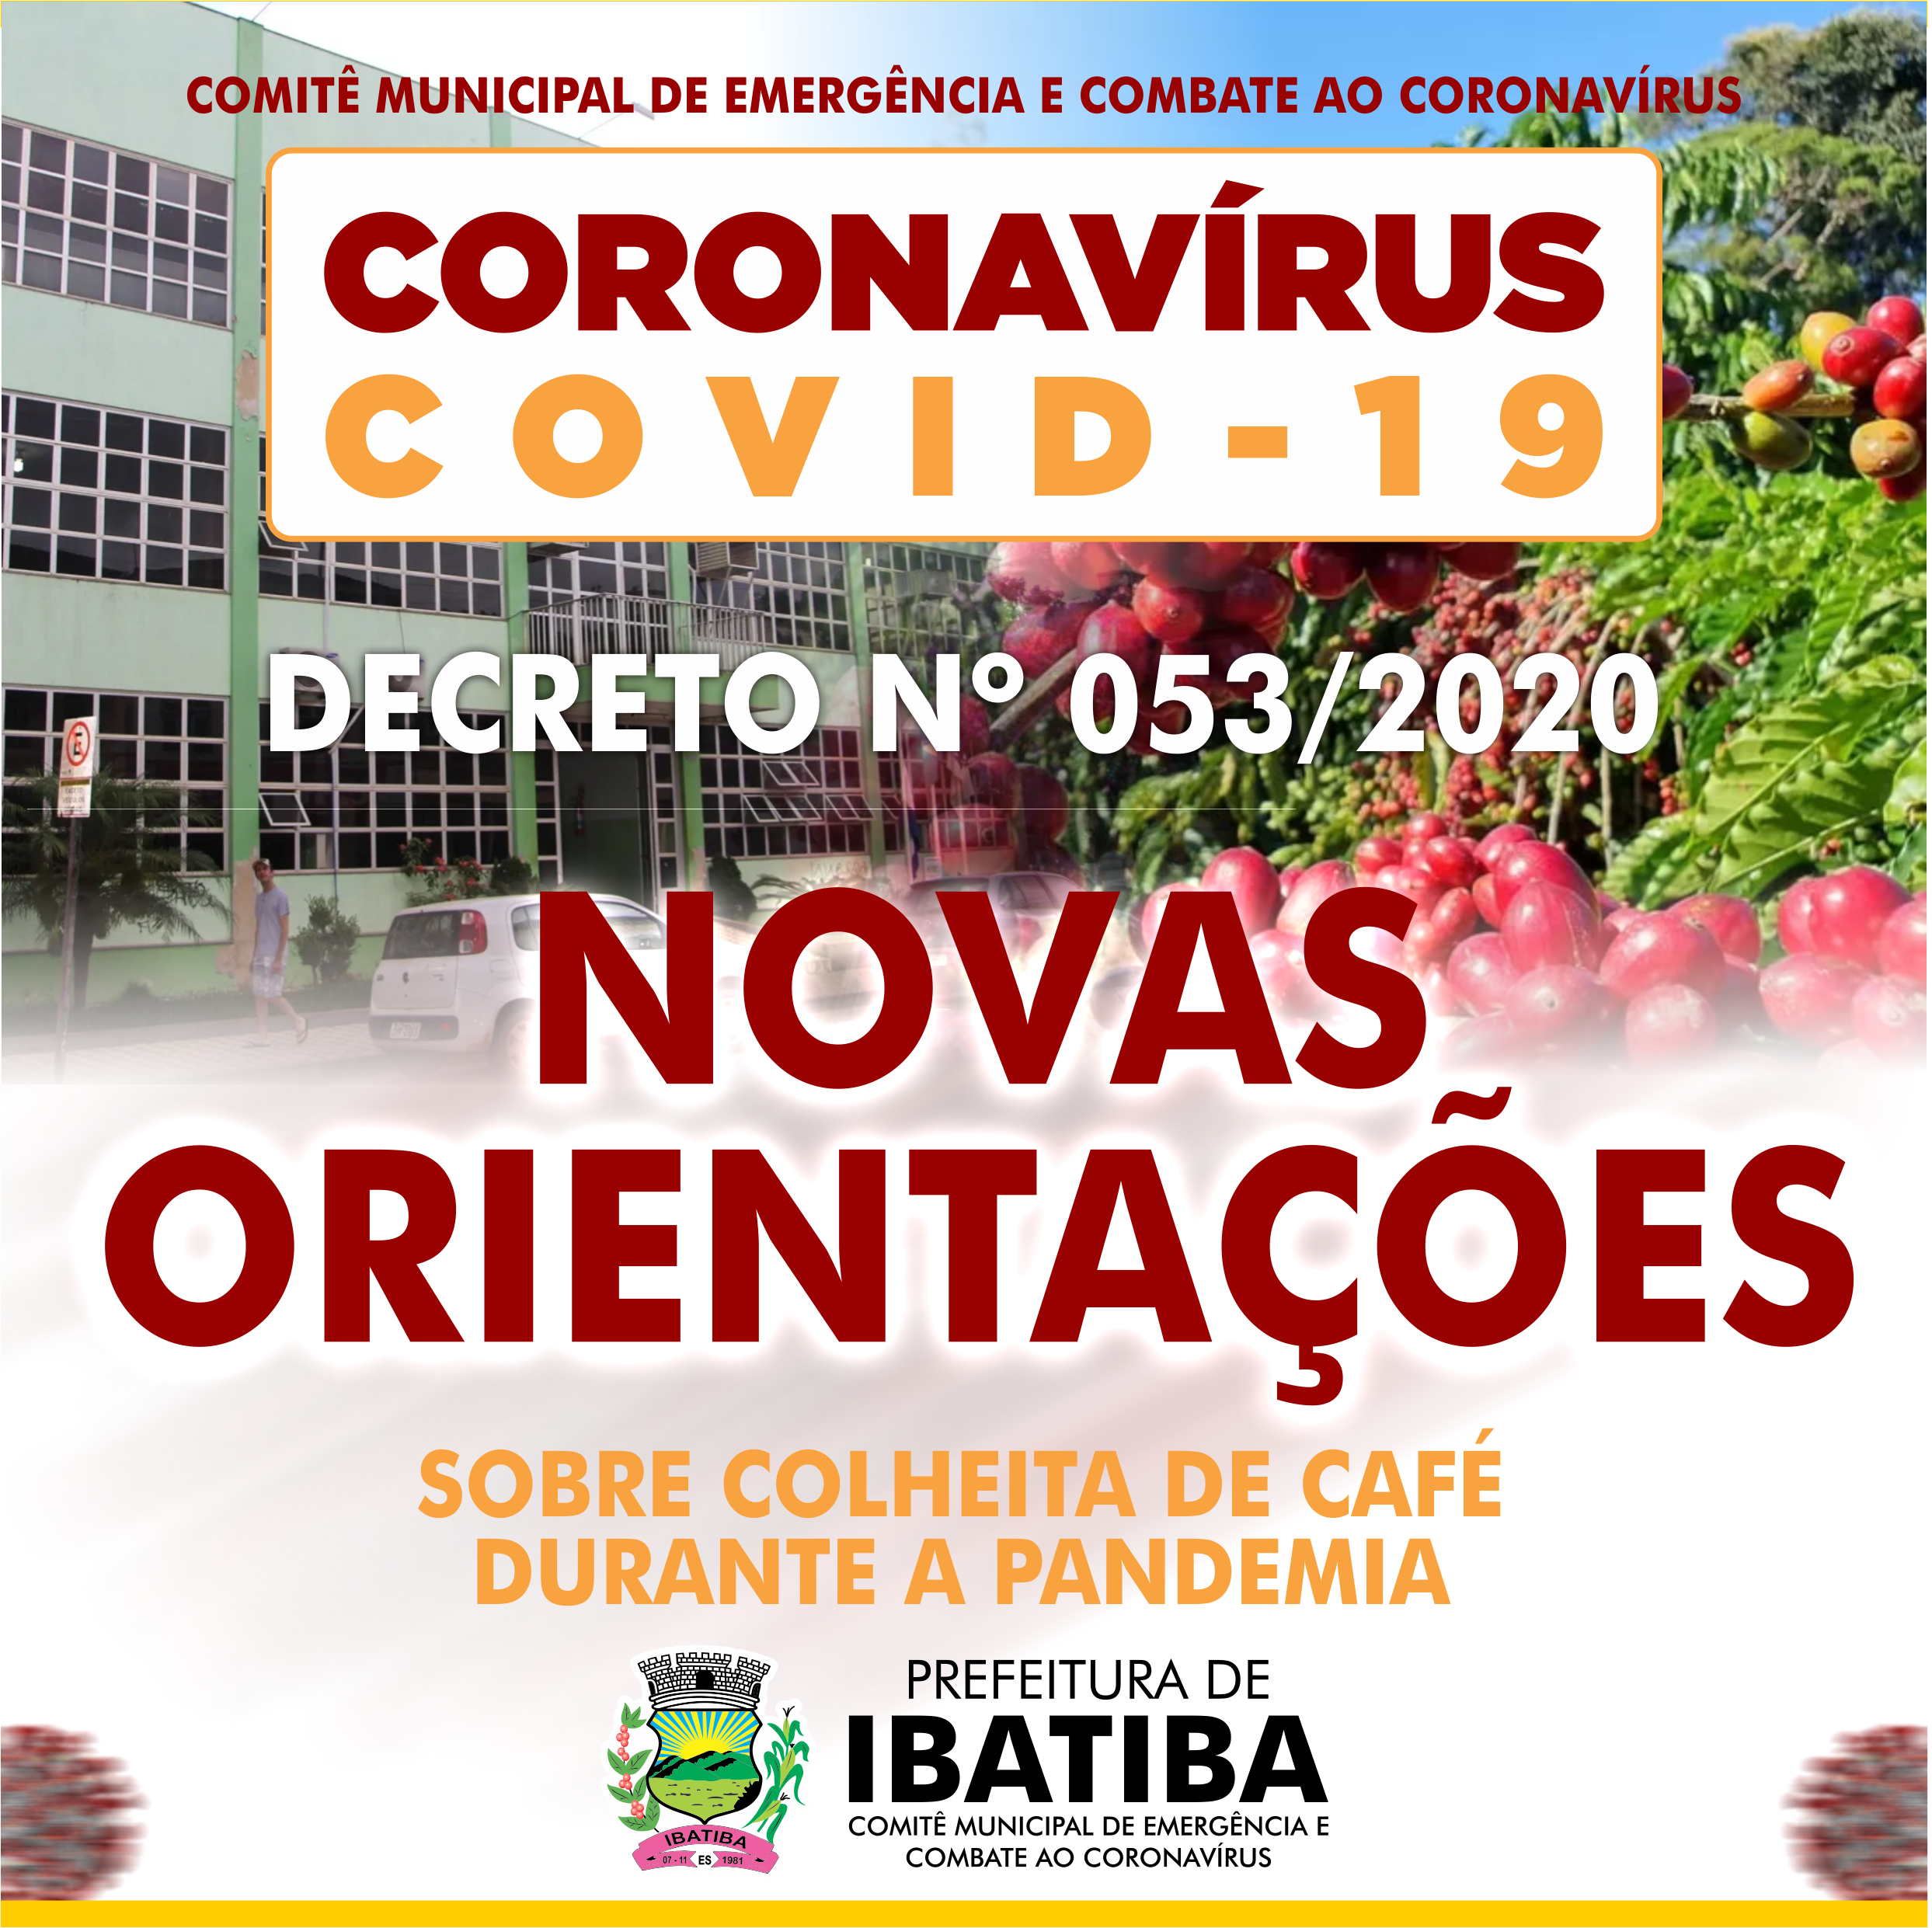 Prefeitura de Ibatiba publica Decreto sobre colheita de café durante pandemia do Coronavírus 